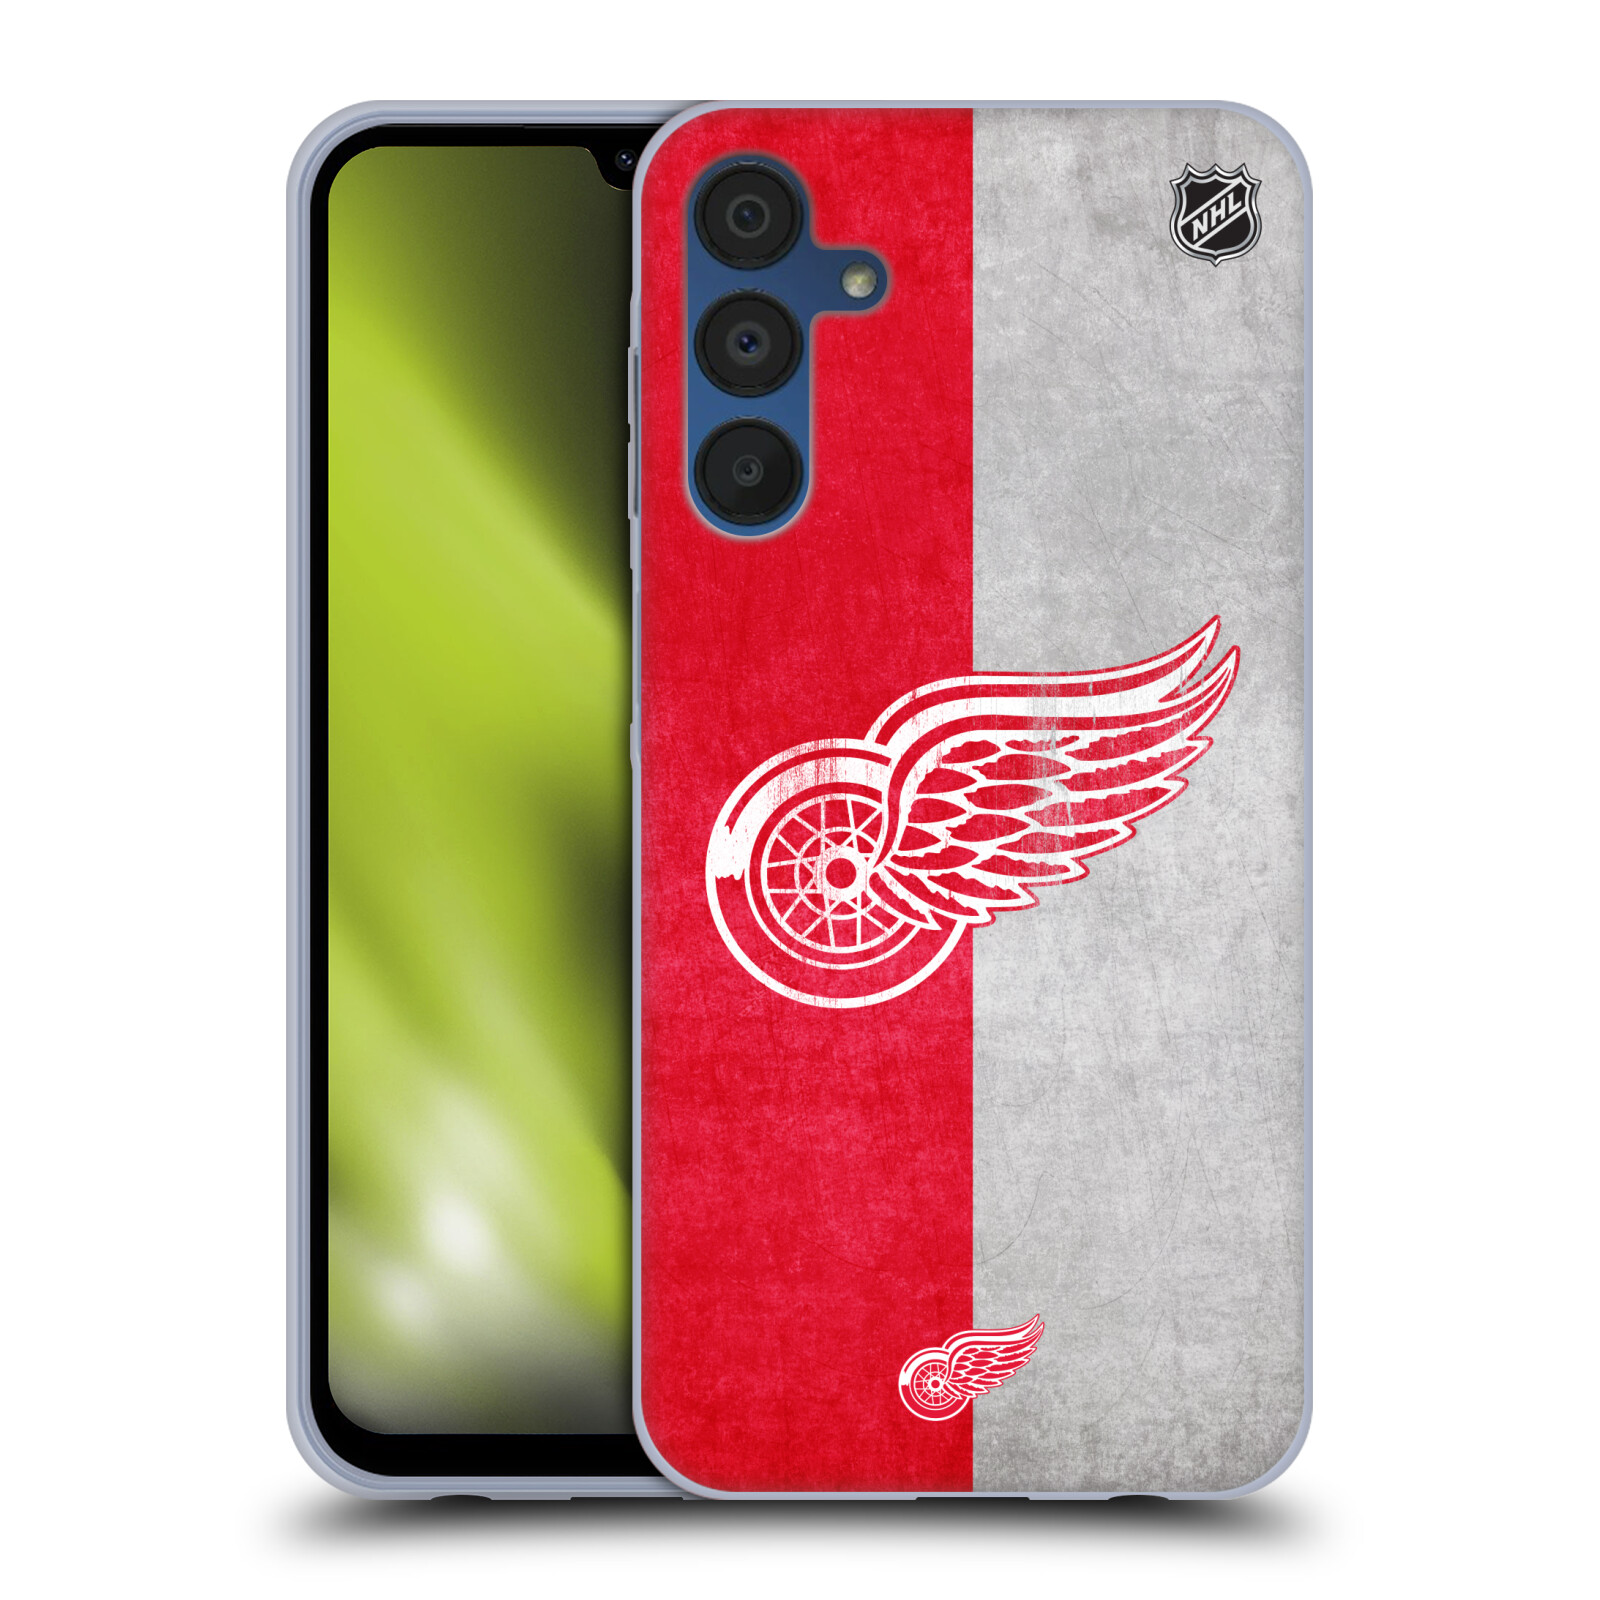 Silikonové pouzdro na mobil Samsung Galaxy A15 / A15 5G - NHL - Půlené logo Detroit Red Wings (Silikonový kryt, obal, pouzdro na mobilní telefon Samsung Galaxy A15 / A15 5G s licencovaným motivem NHL - Půlené logo Detroit Red Wings)